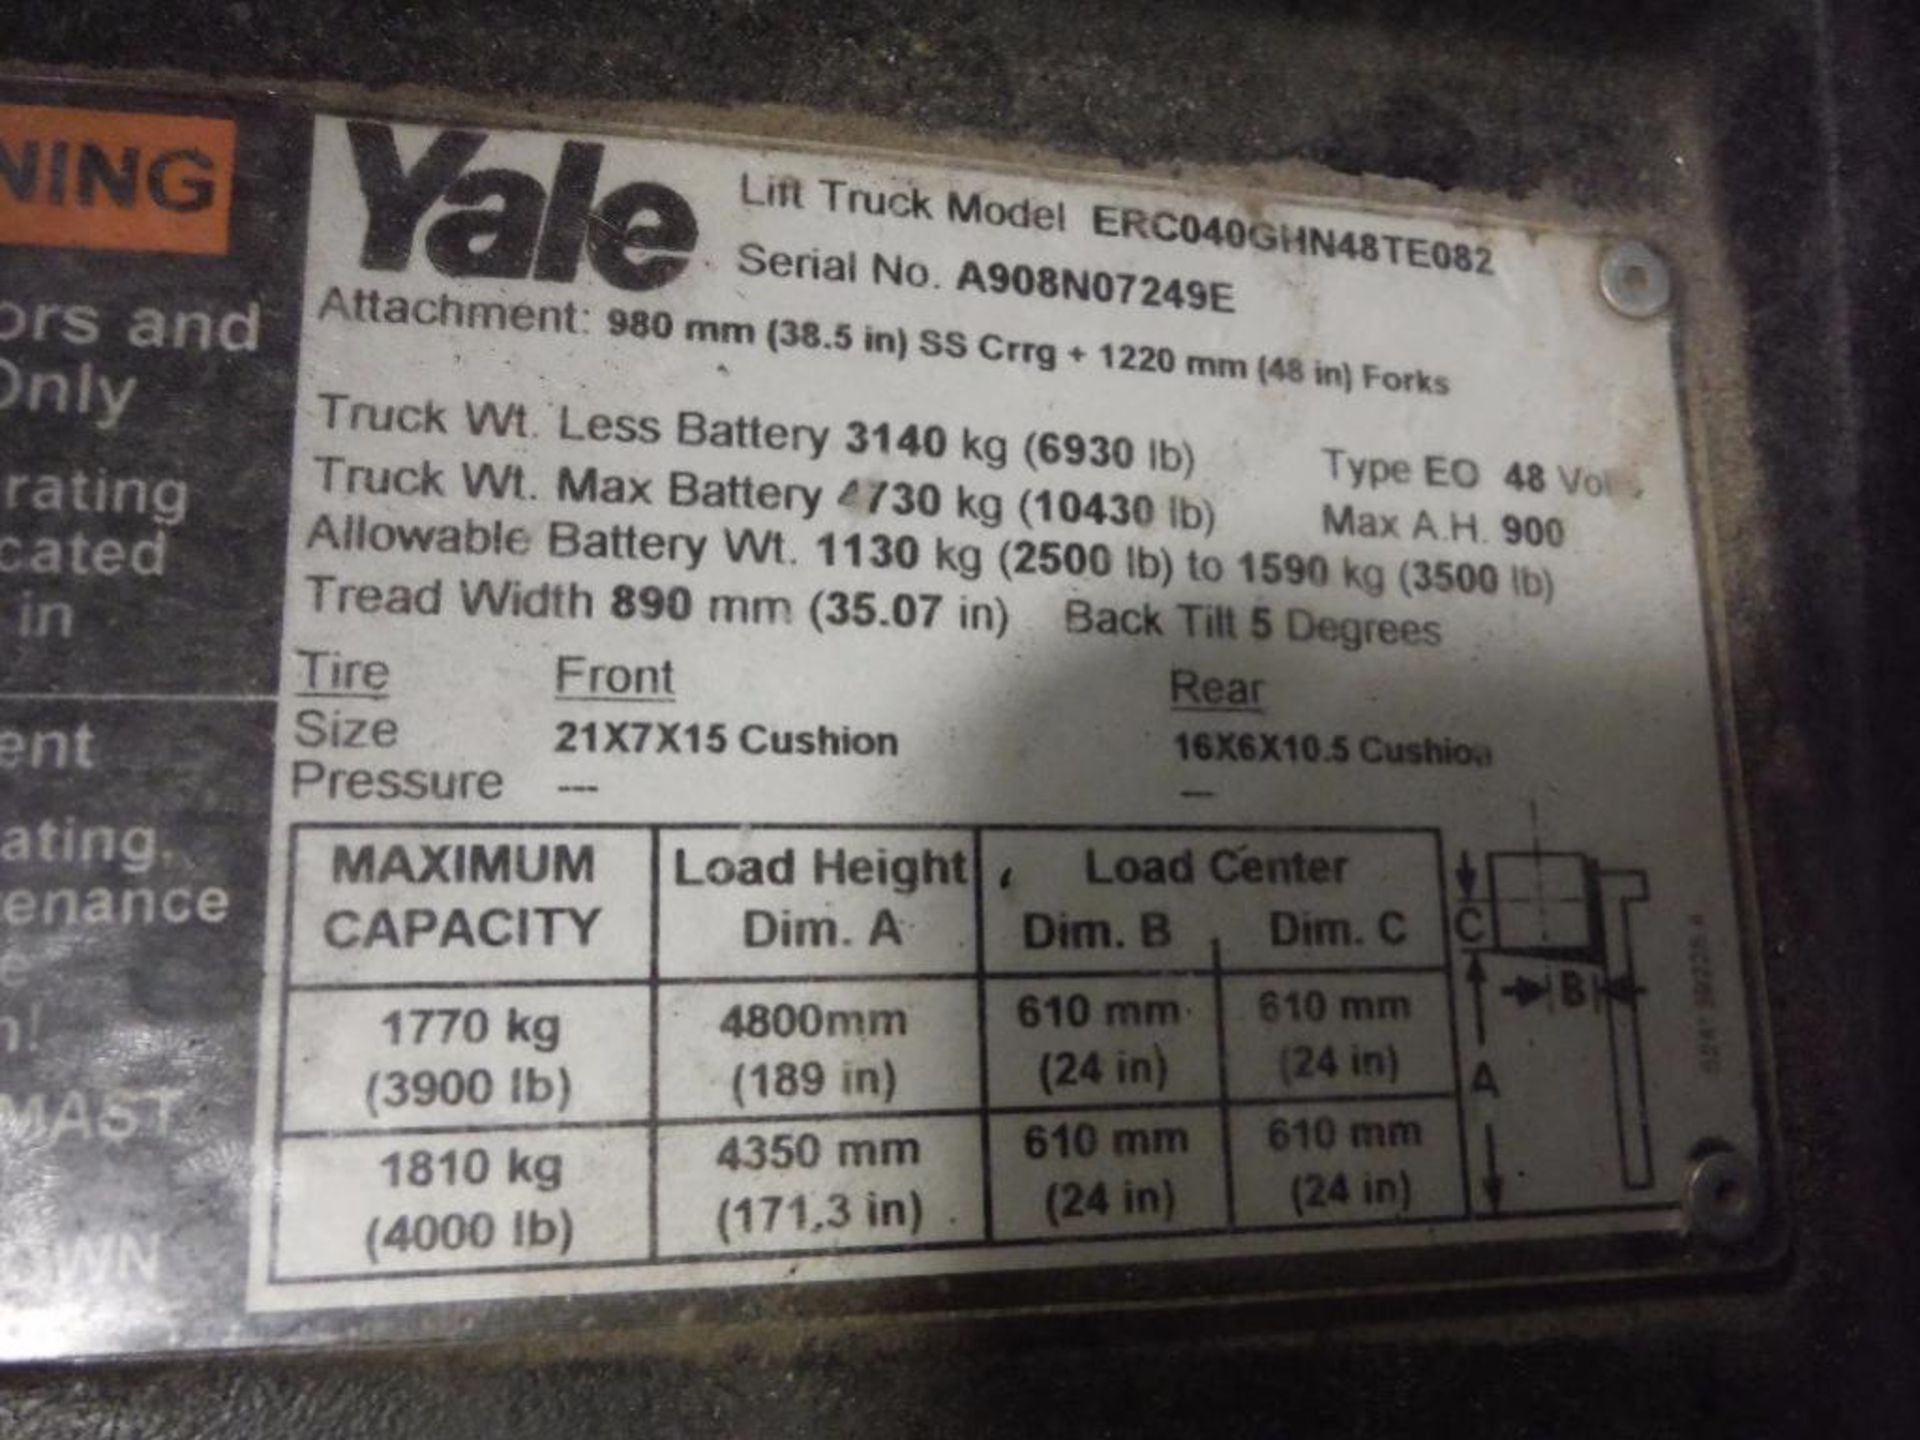 Yale 48 volt forklift, Model ERC040GHN48SE082, SN A908N07249E, 3900 lb. capacity, 189 in. lift - Image 6 of 7